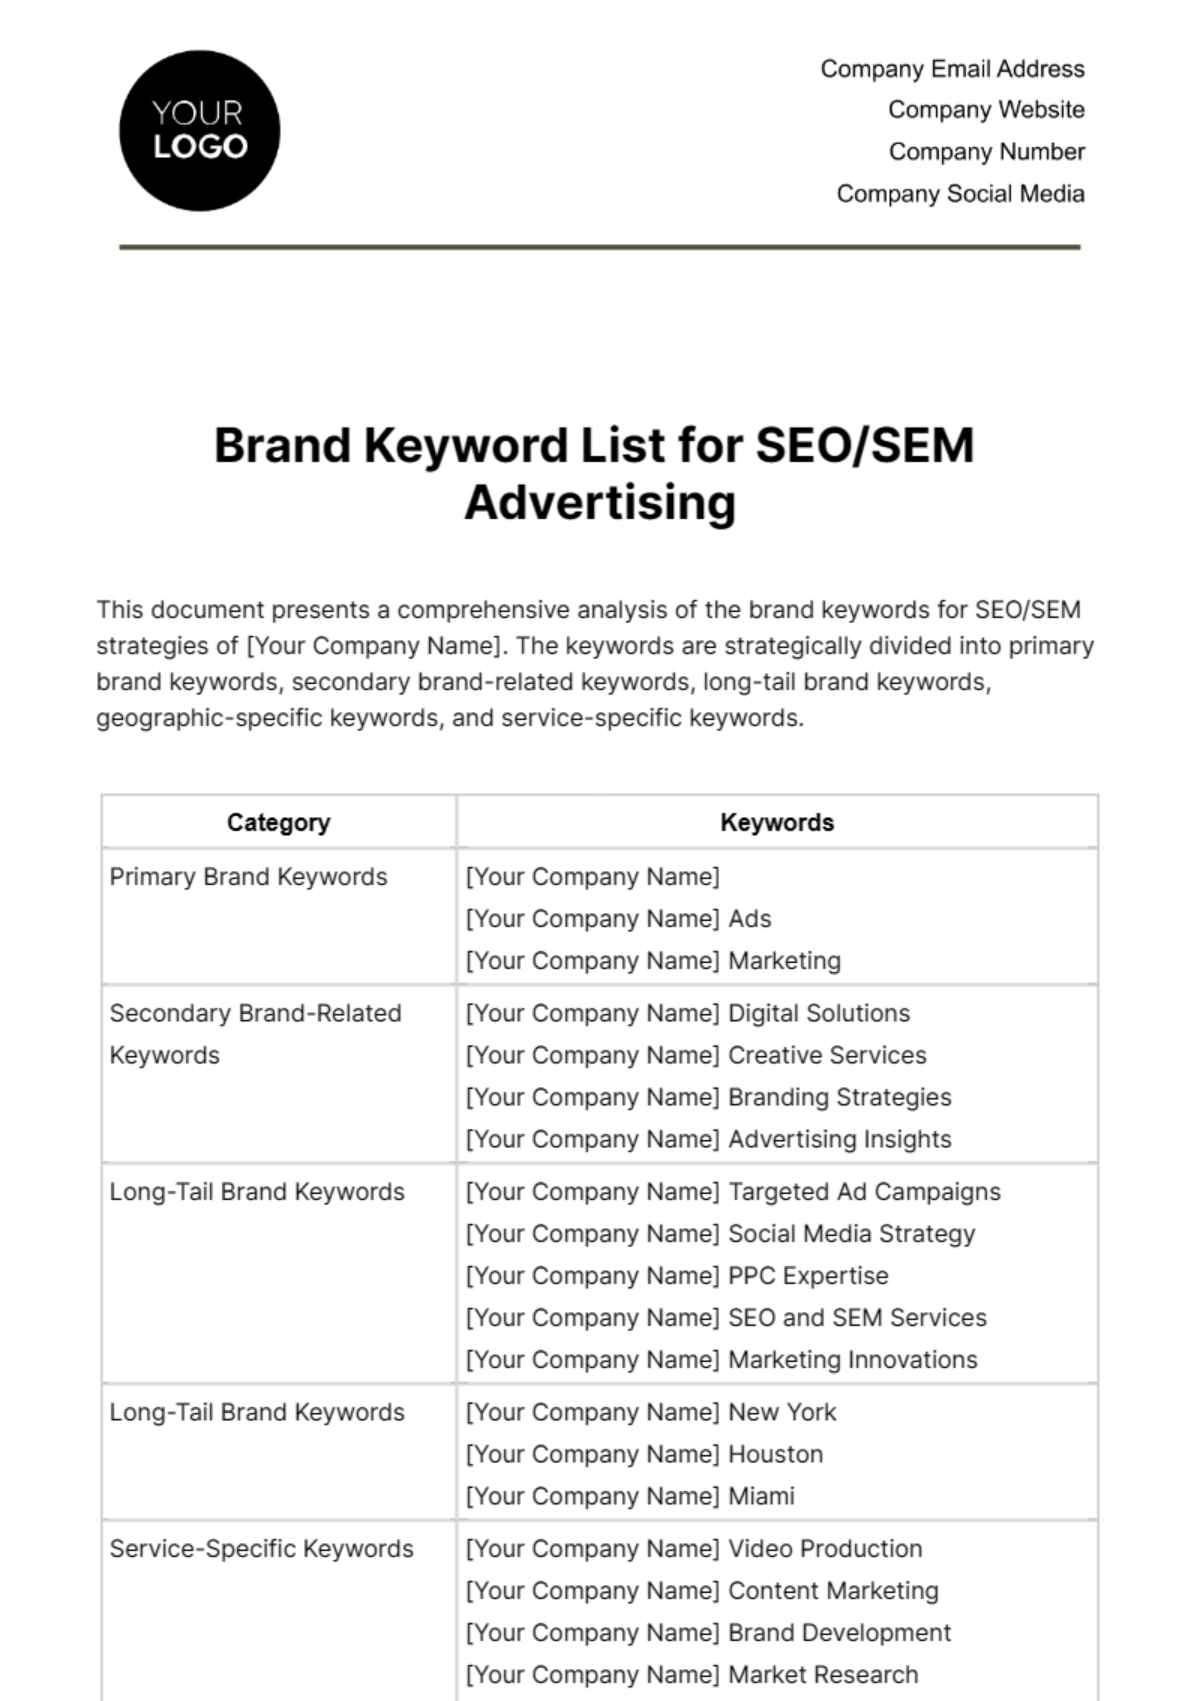 Brand Keyword List for SEO/SEM Advertising Template